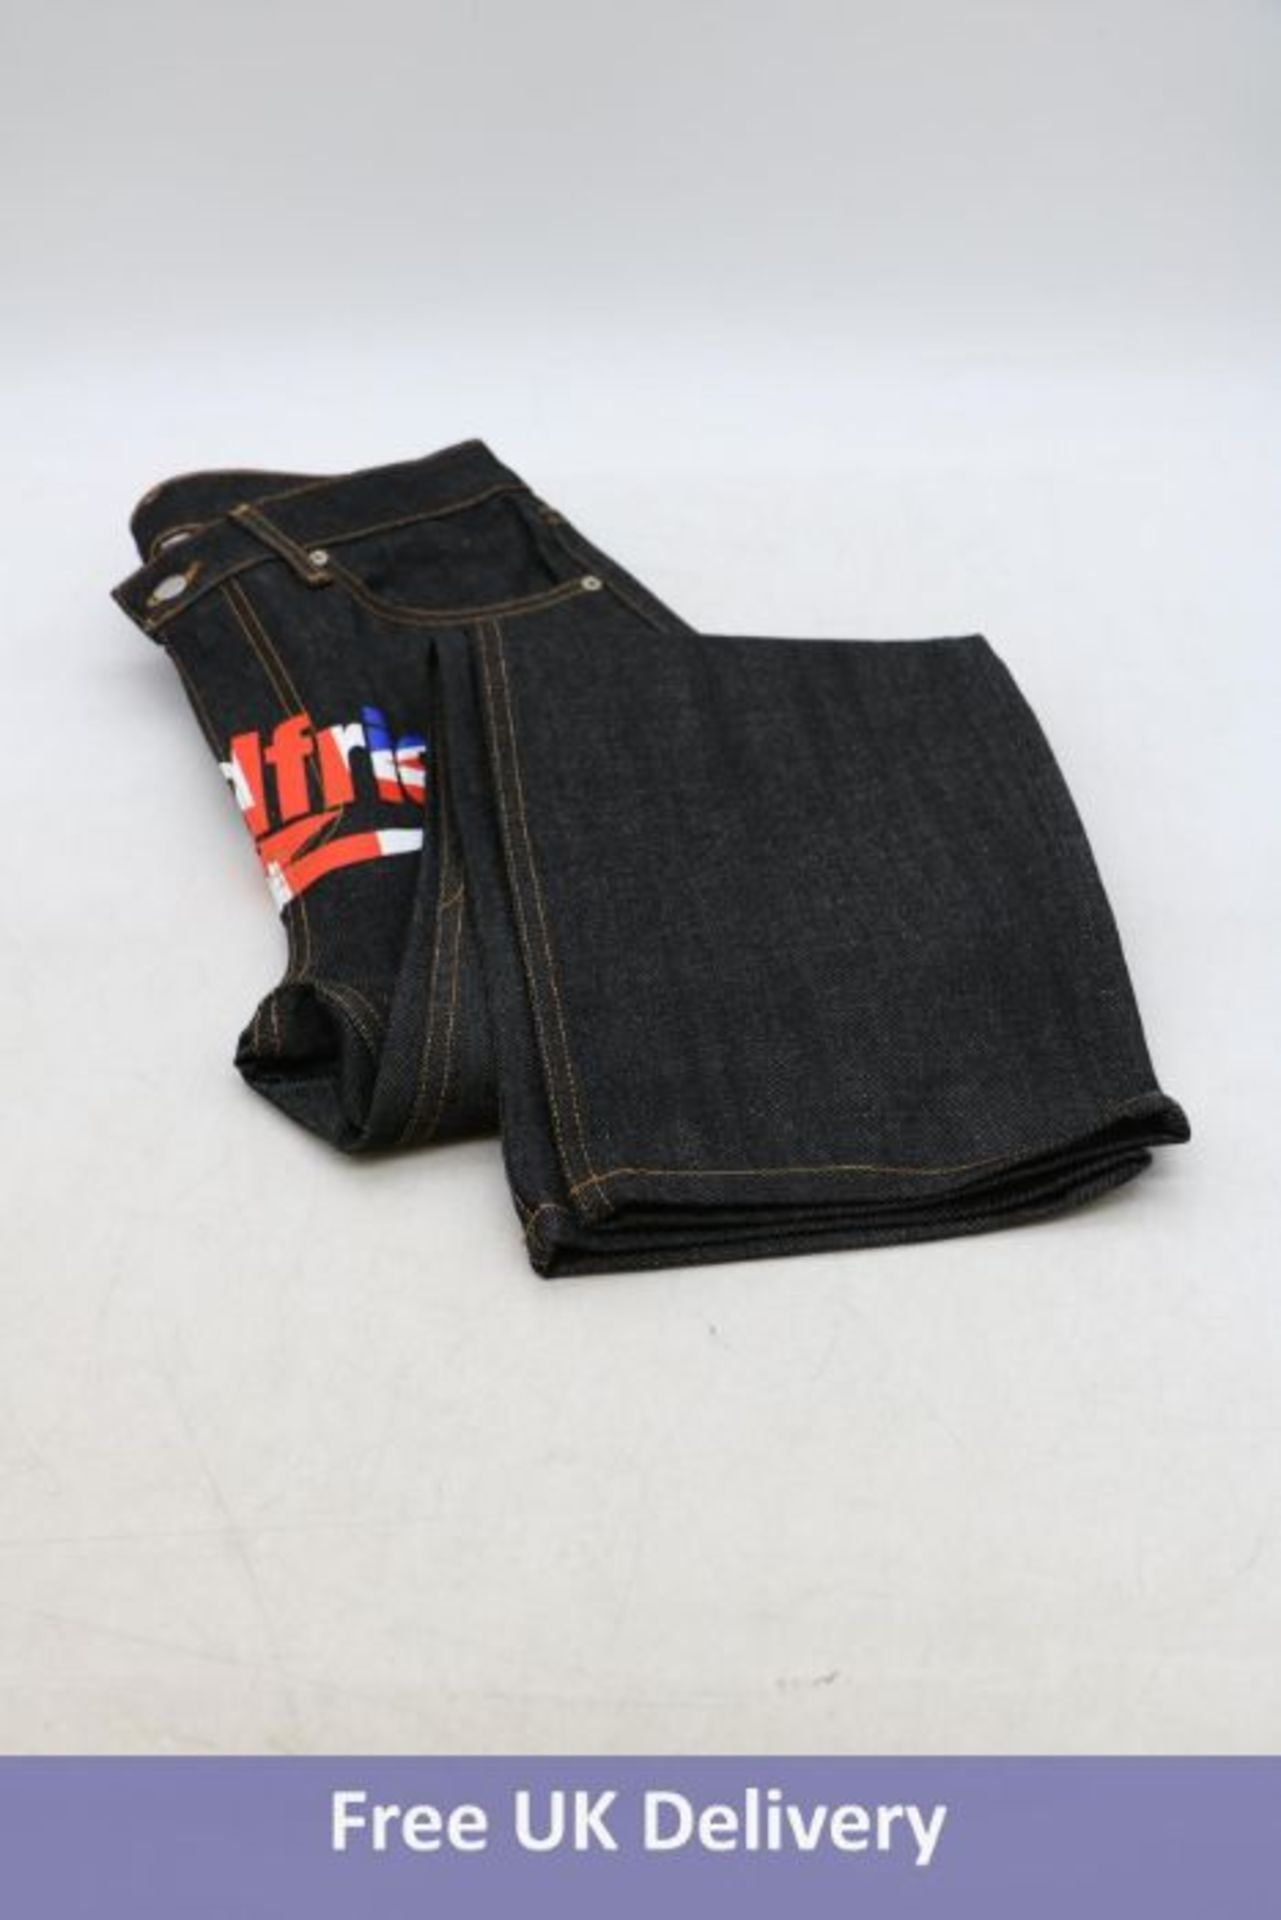 Three BadFriend Men's Streetwear, Y2K Union Jack Denim Jeans, Black, 34W - Image 2 of 3